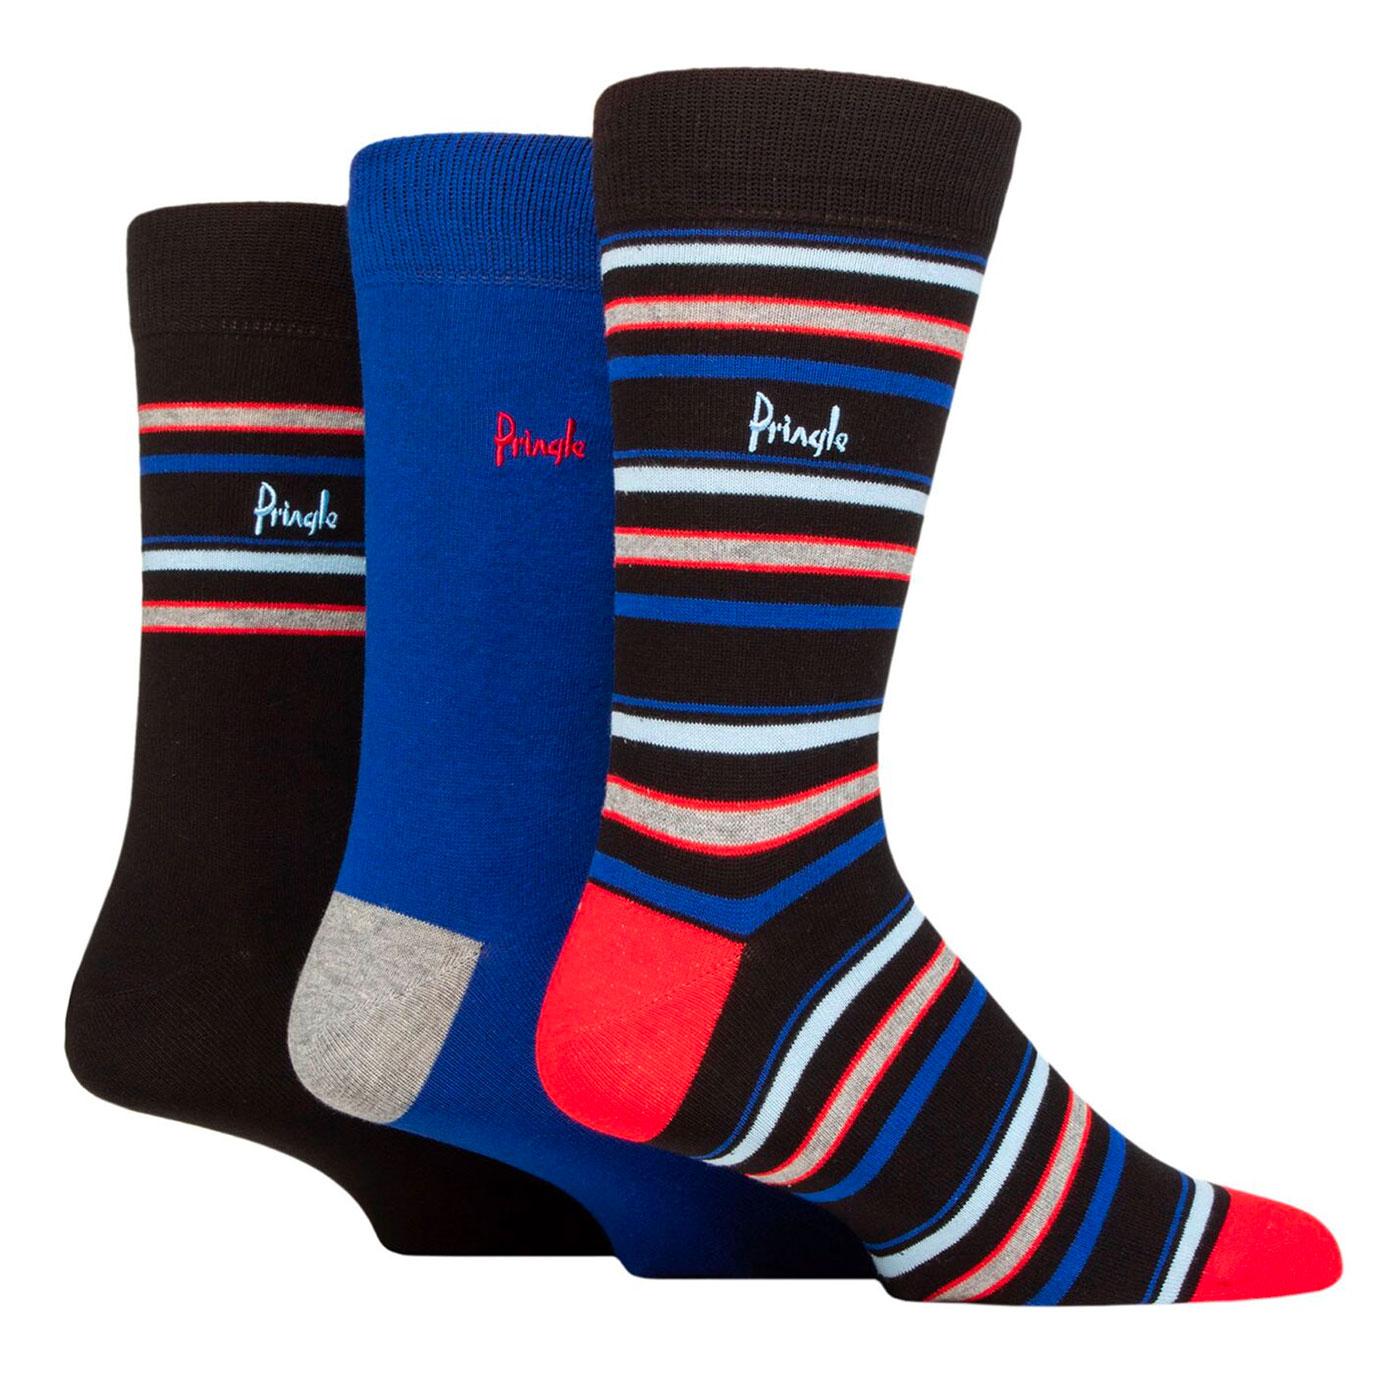 +Pringle 3 Pack Men's Jacquard Striped Socks B/B/R